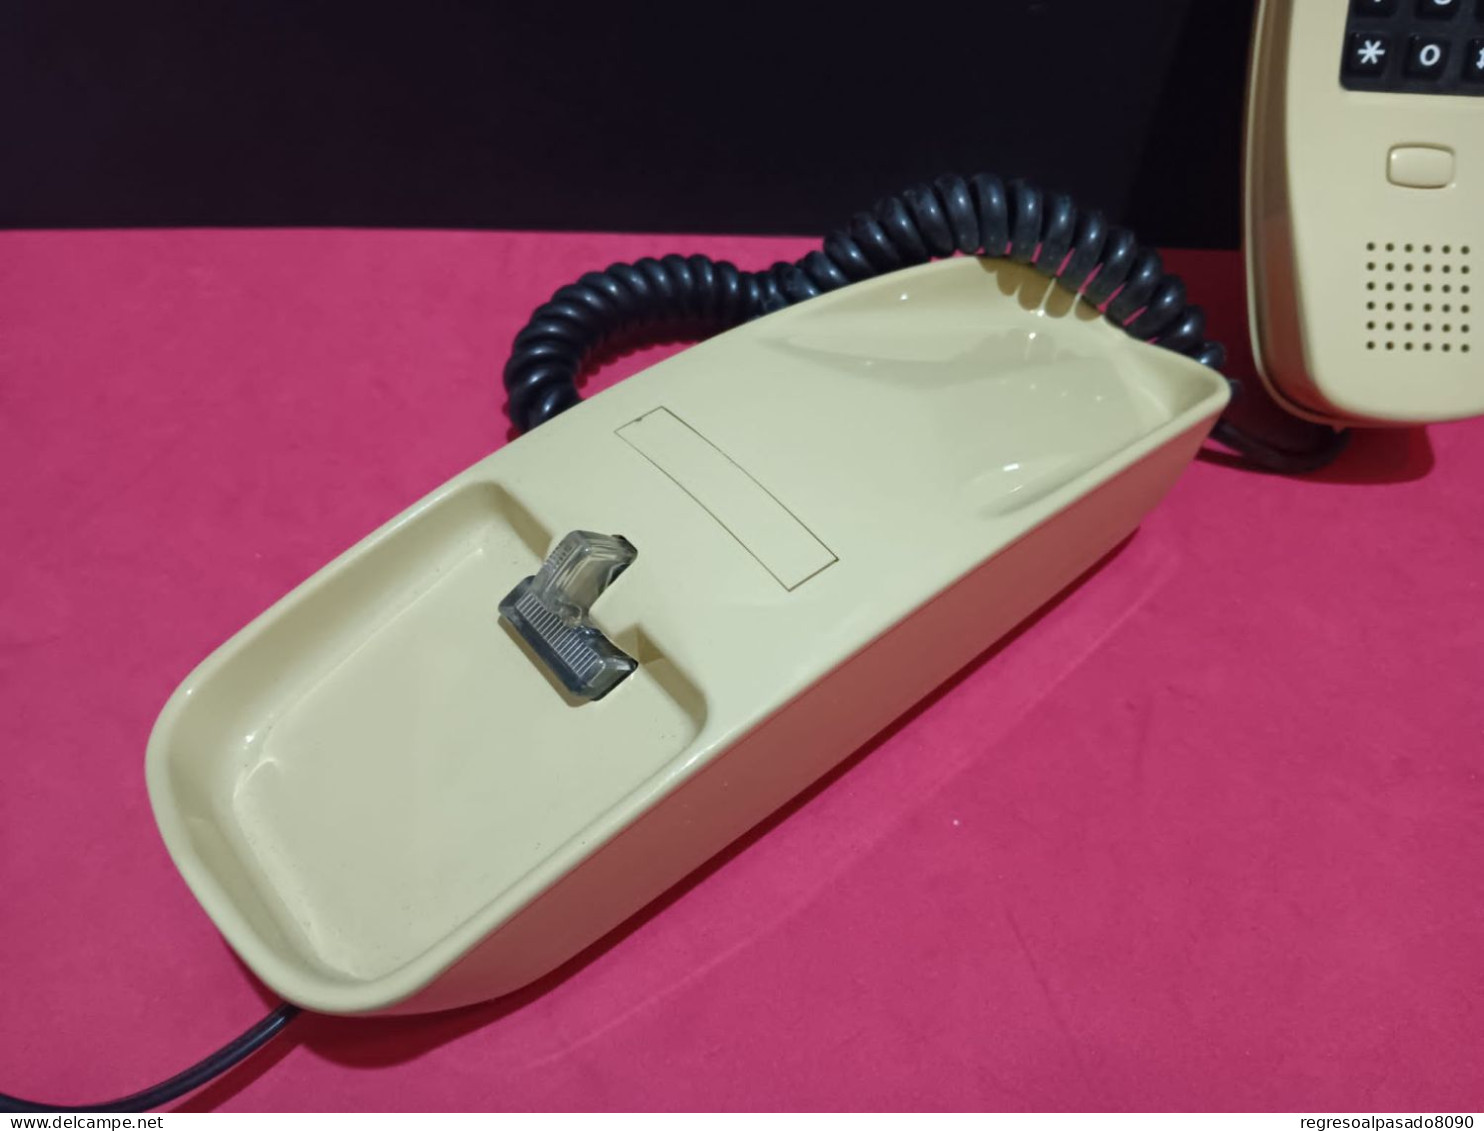 Antiguo teléfono góndola color beis o crema. vintage de teclas téléphone telephone phone